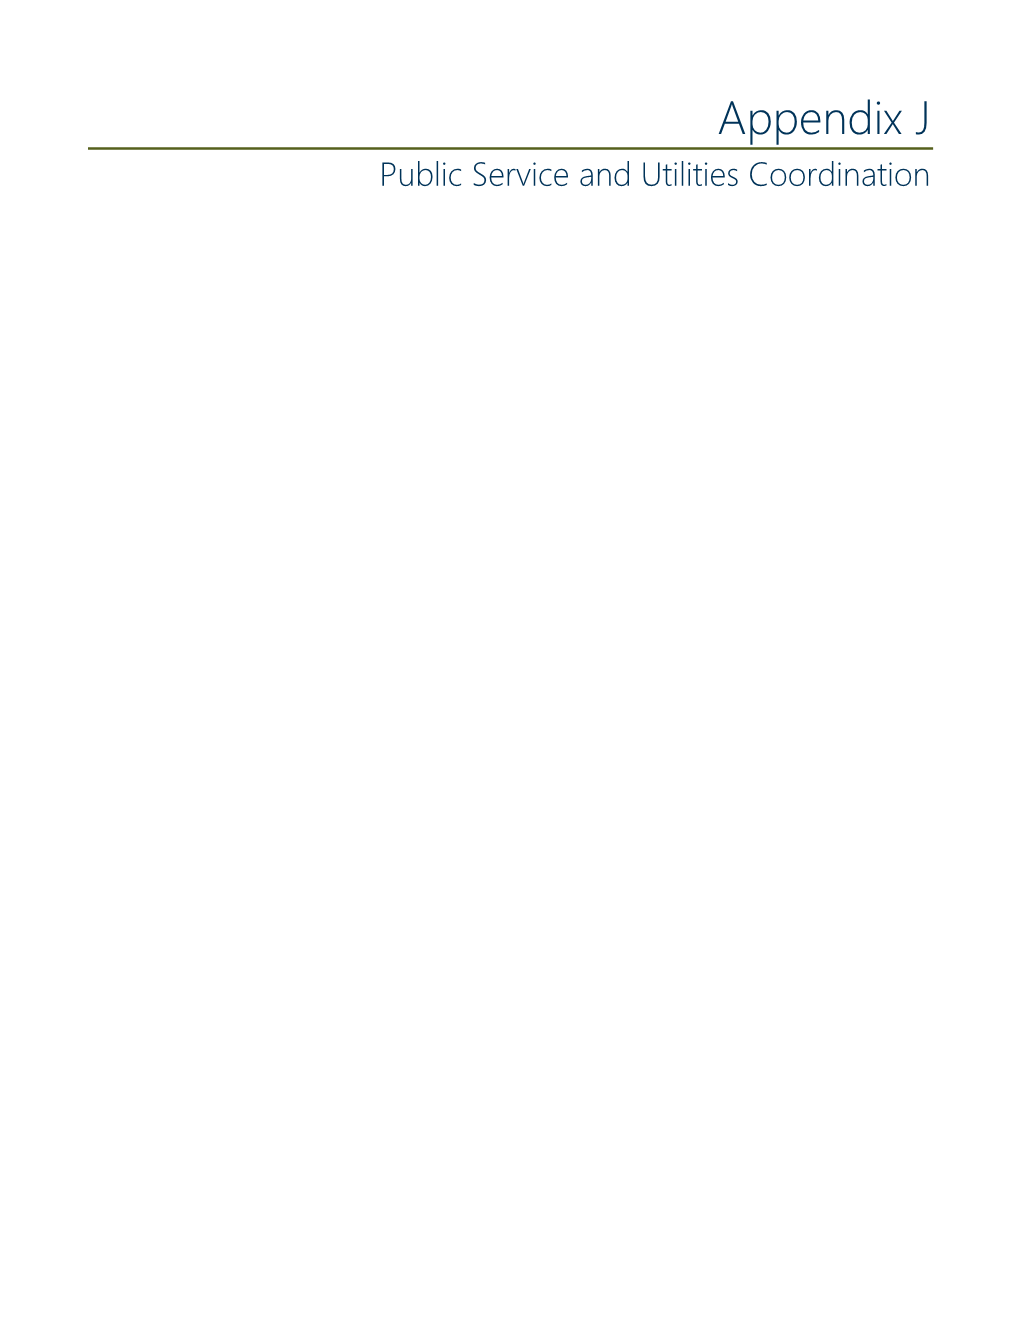 Appendix J Public Service and Utilities Coordination